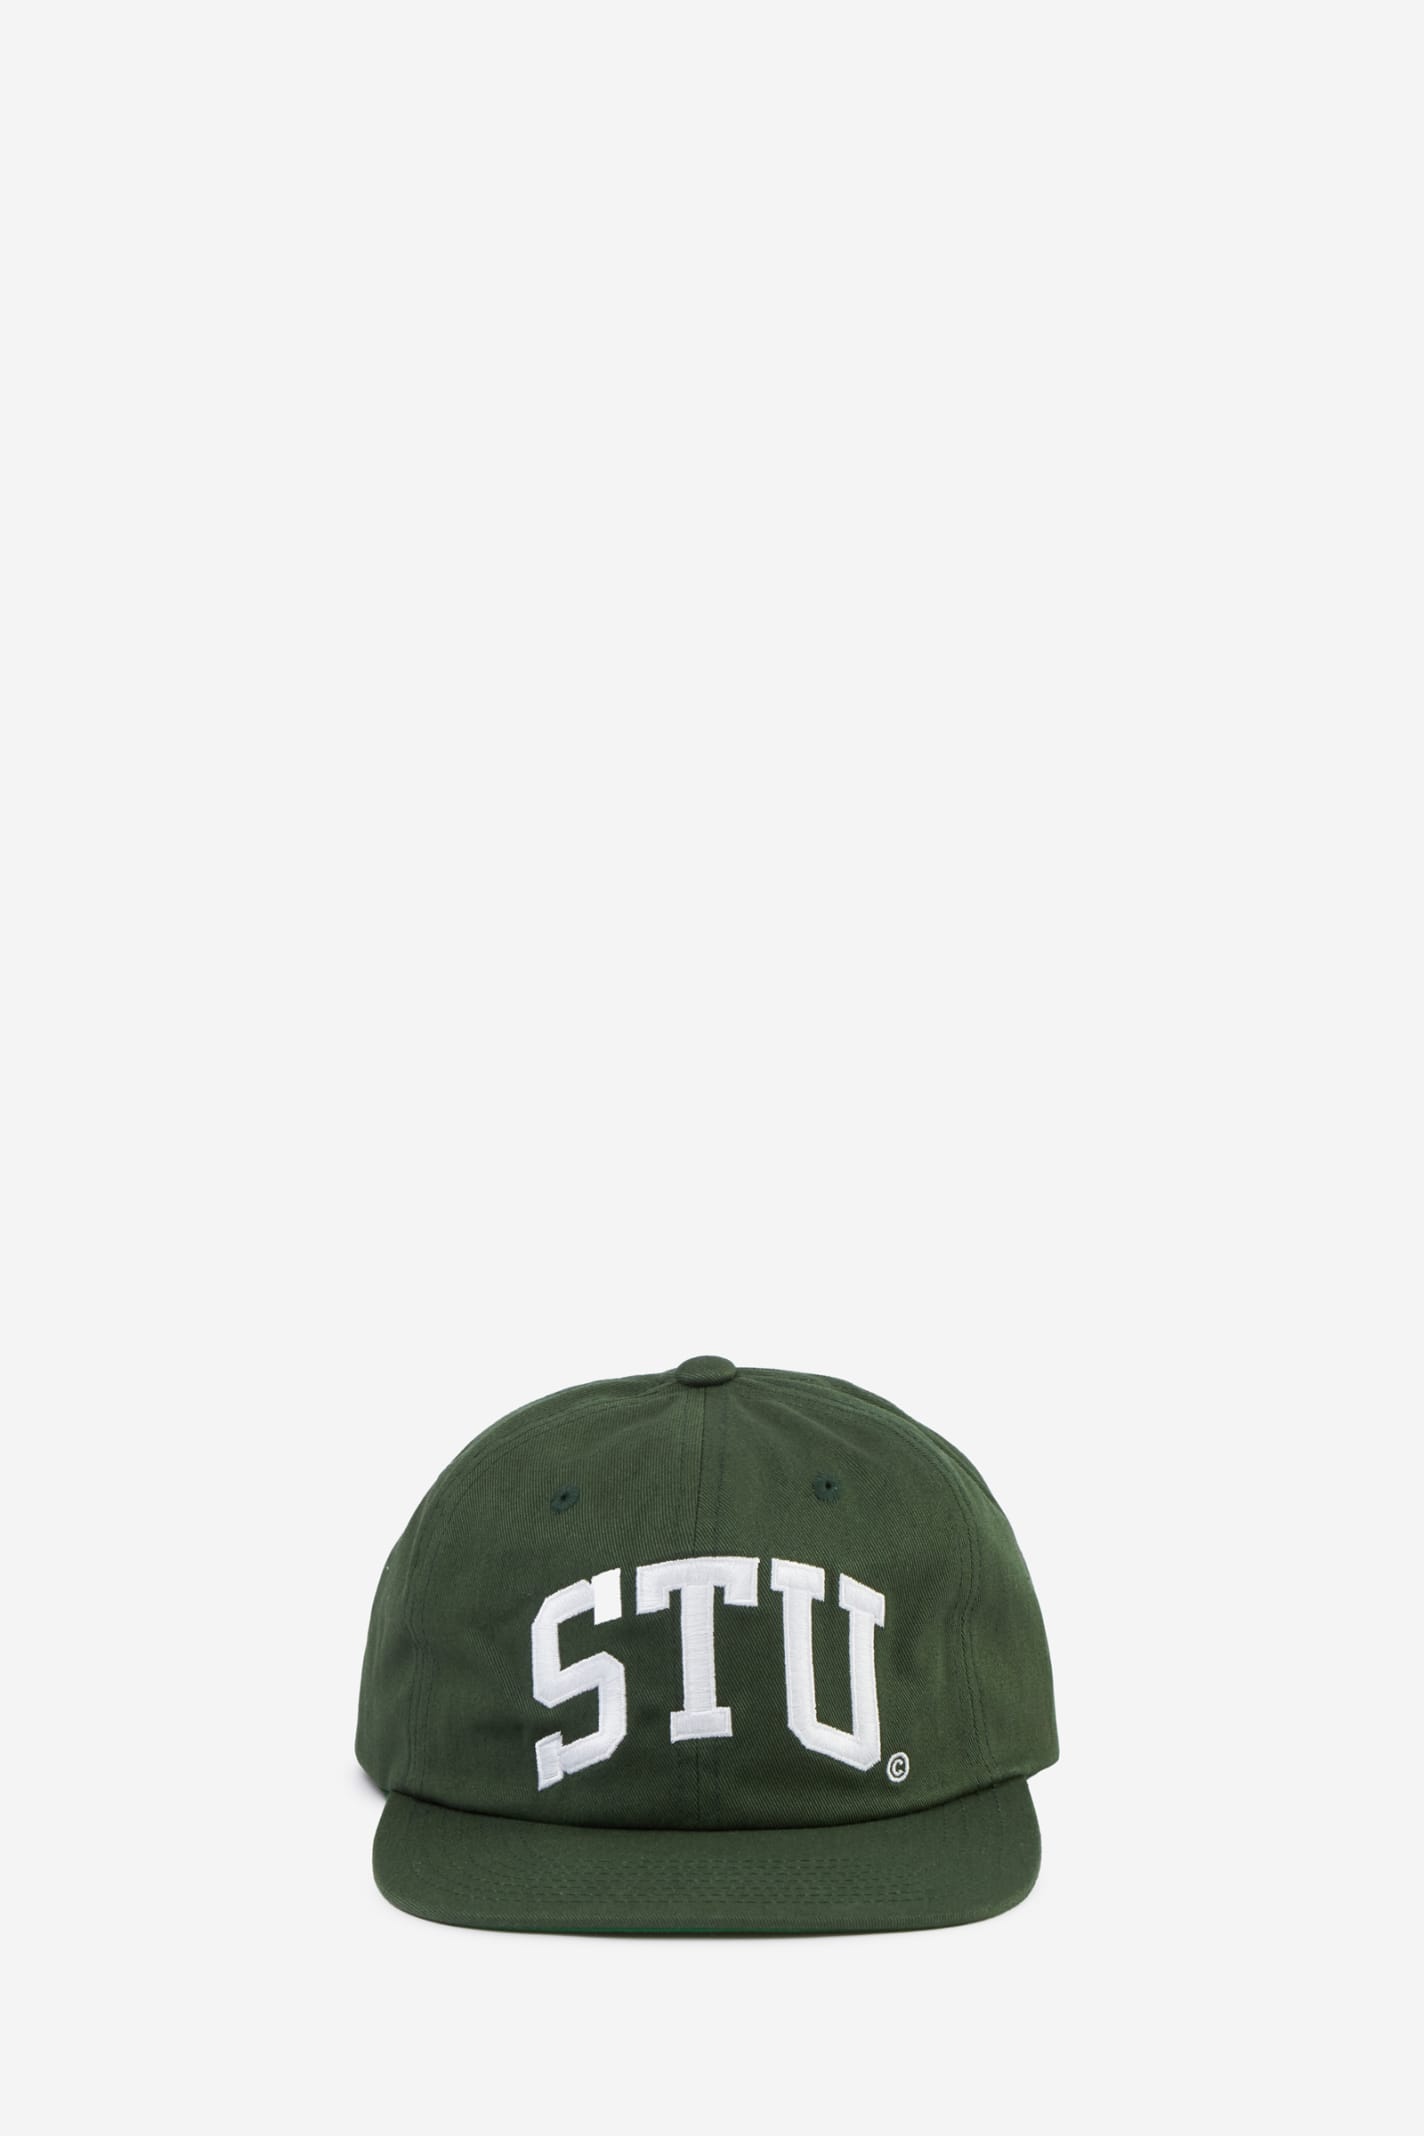 Stu Arch Strapback Hats